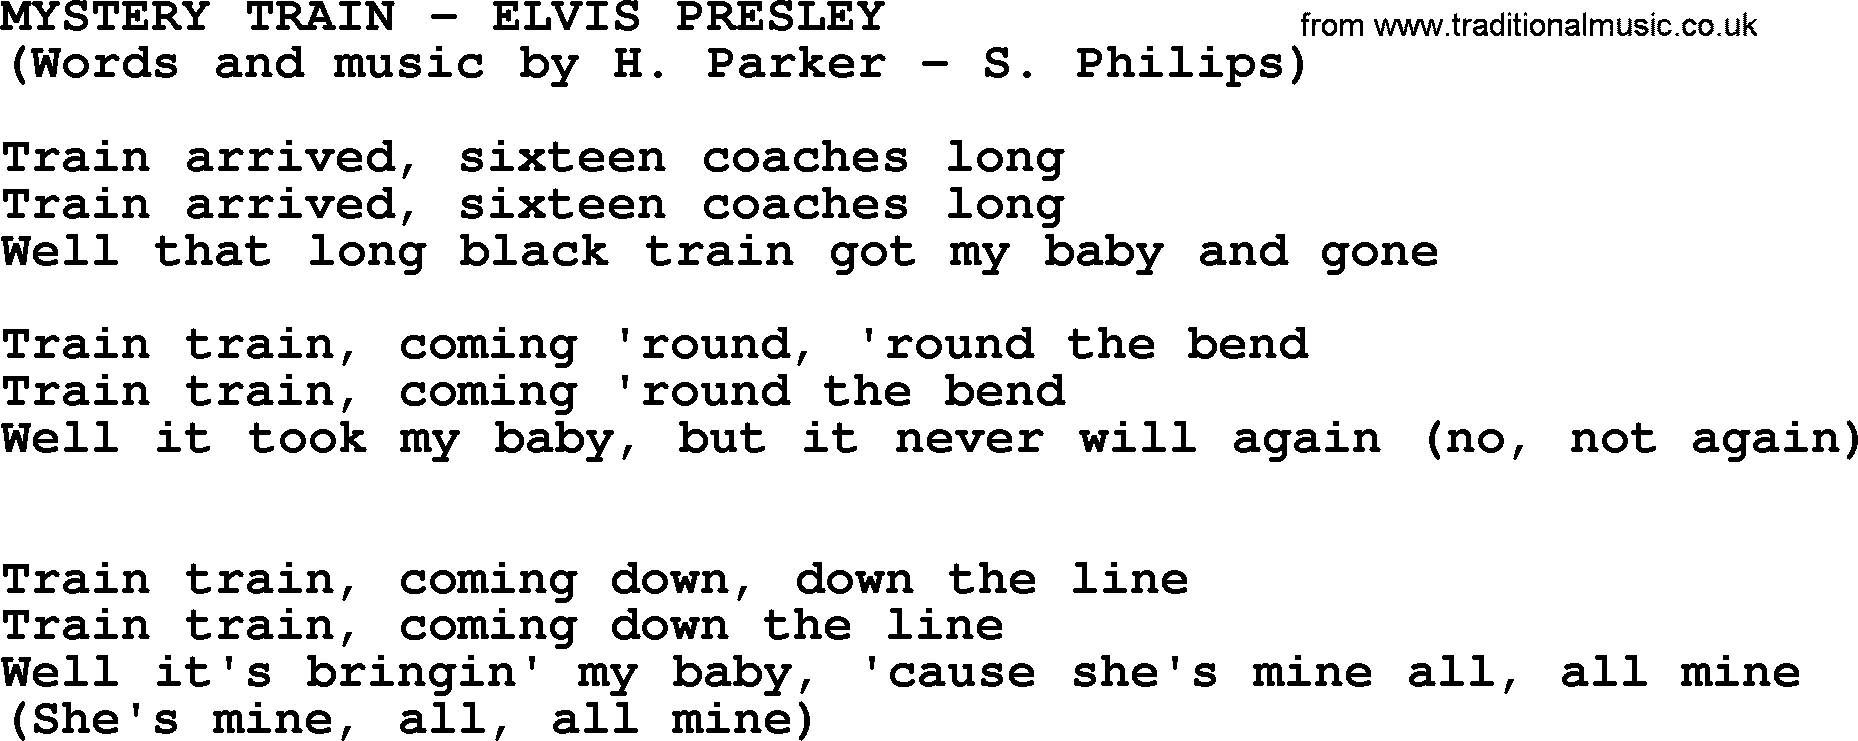 Elvis Presley song: Mystery Train lyrics